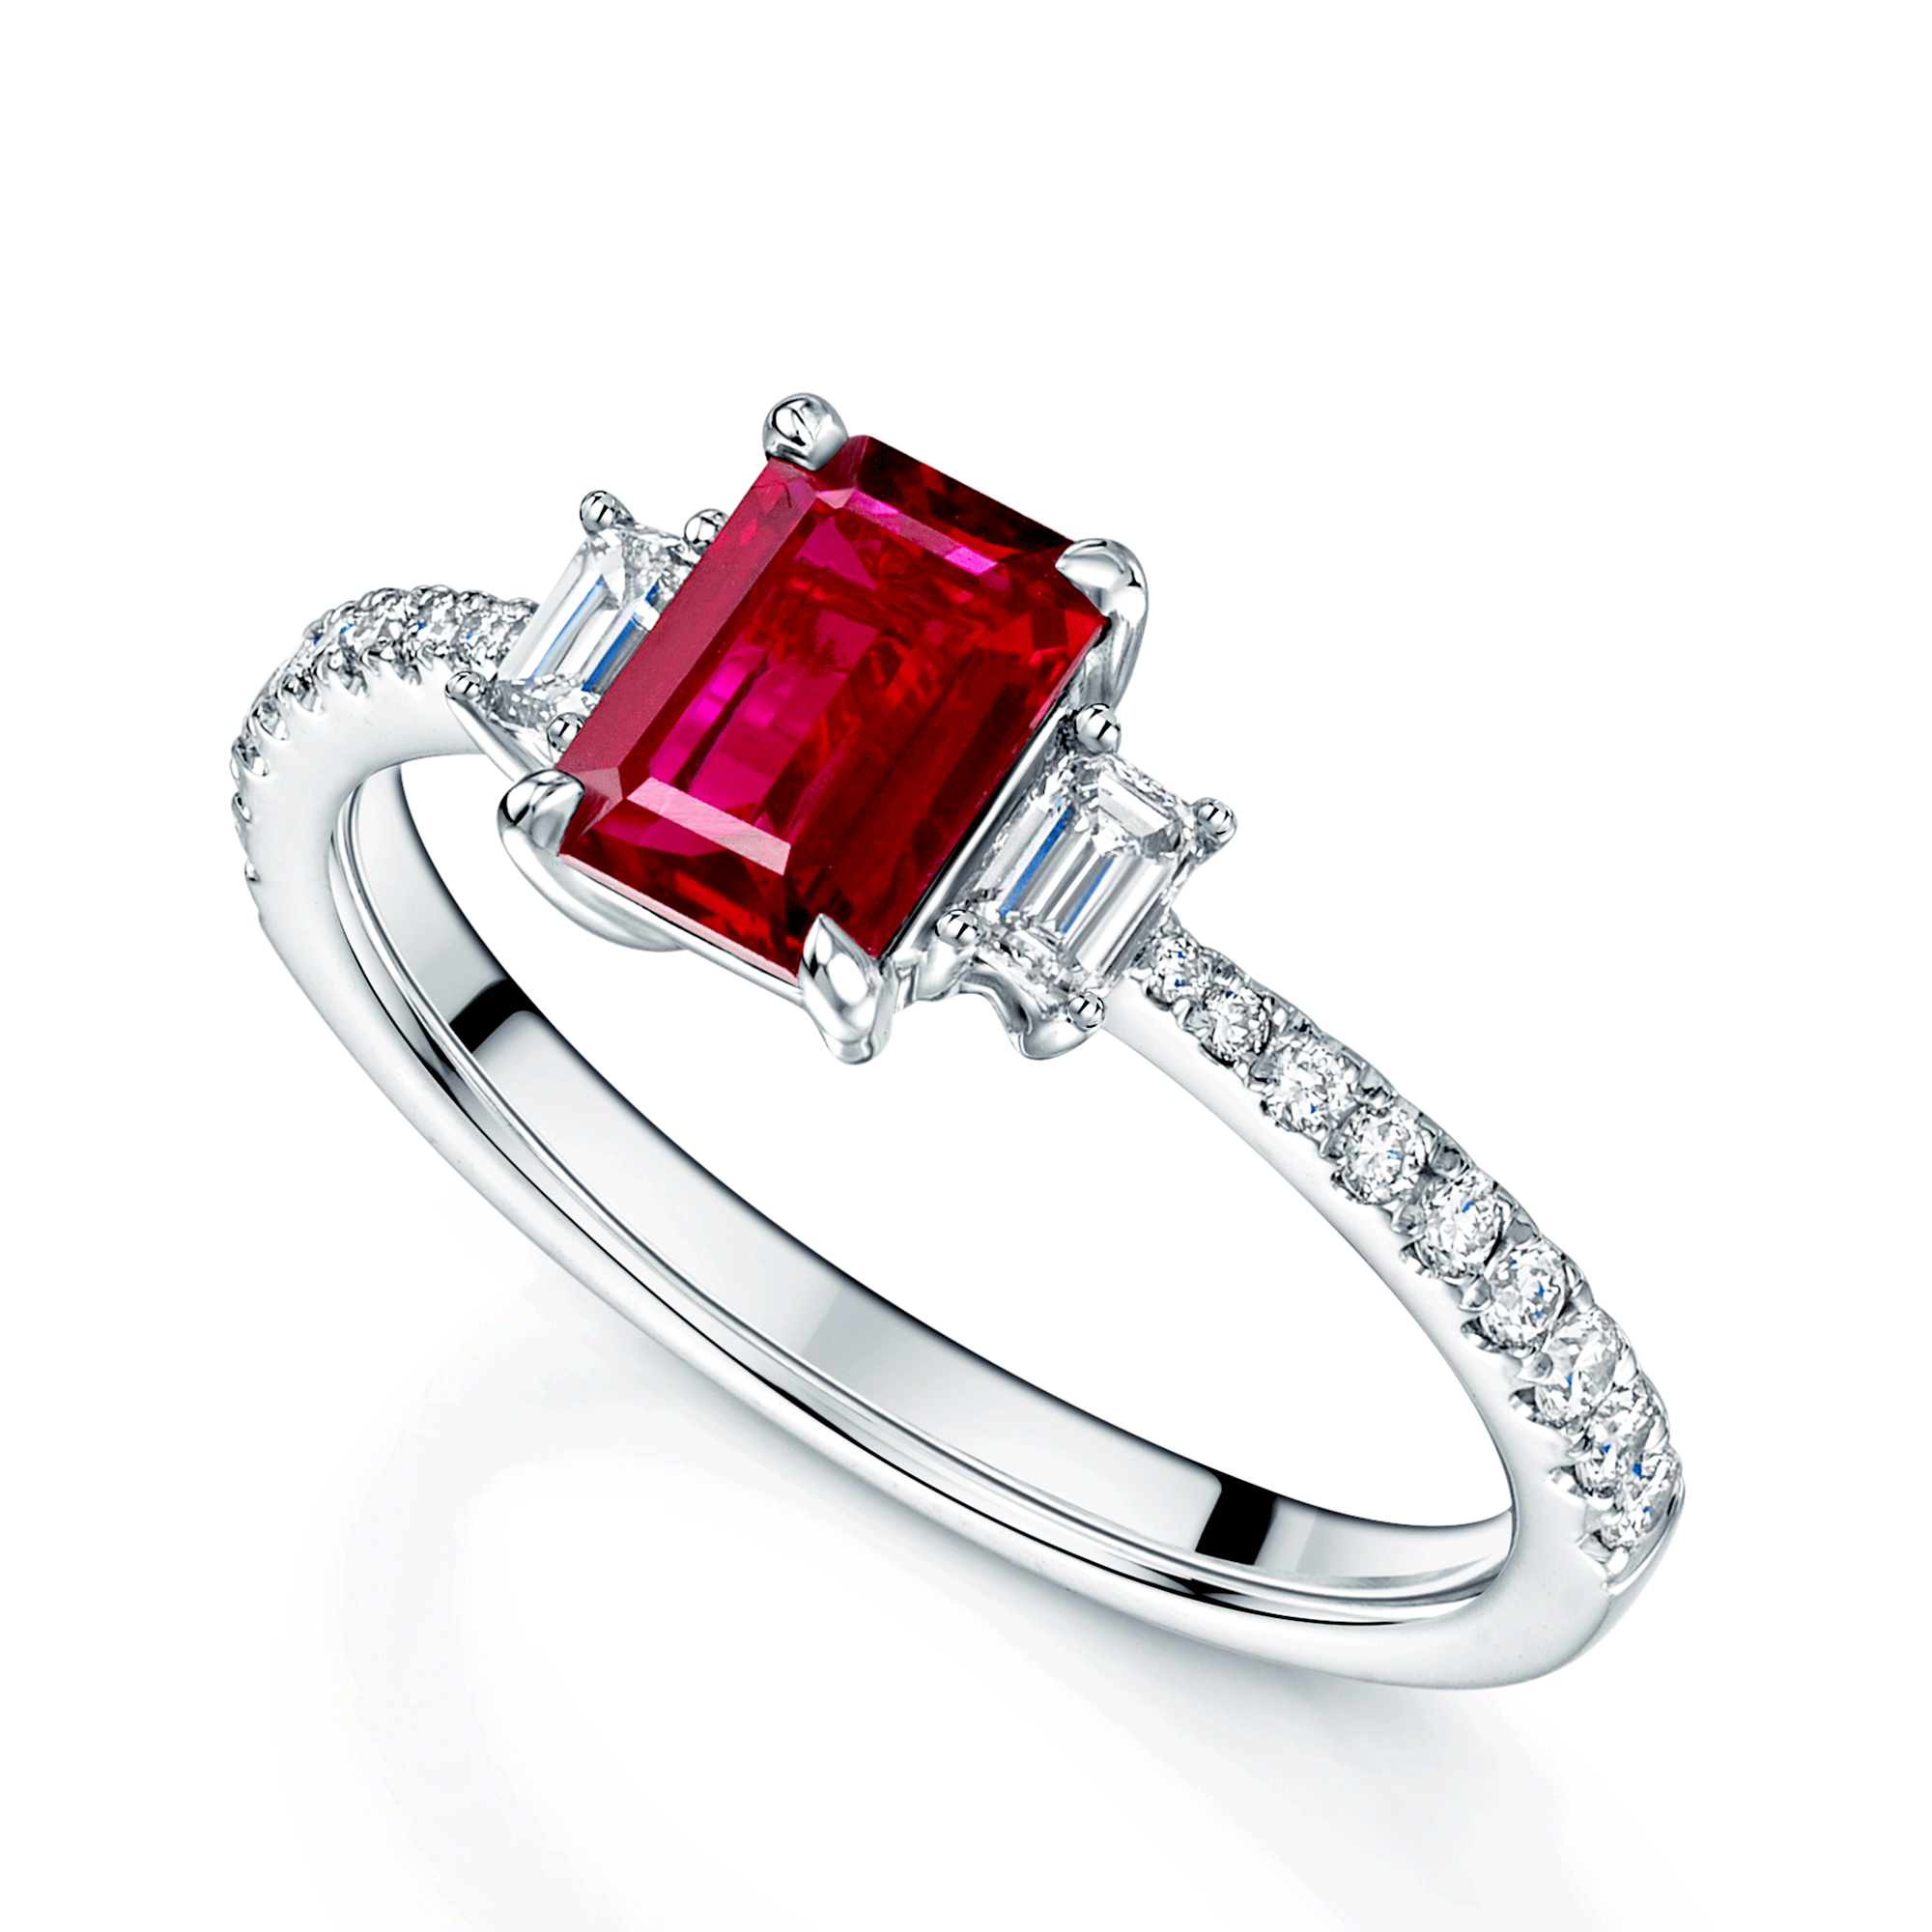 Platinum Emerald Cut Ruby And Diamond Three Stone Ring With Diamond Set Shoulders